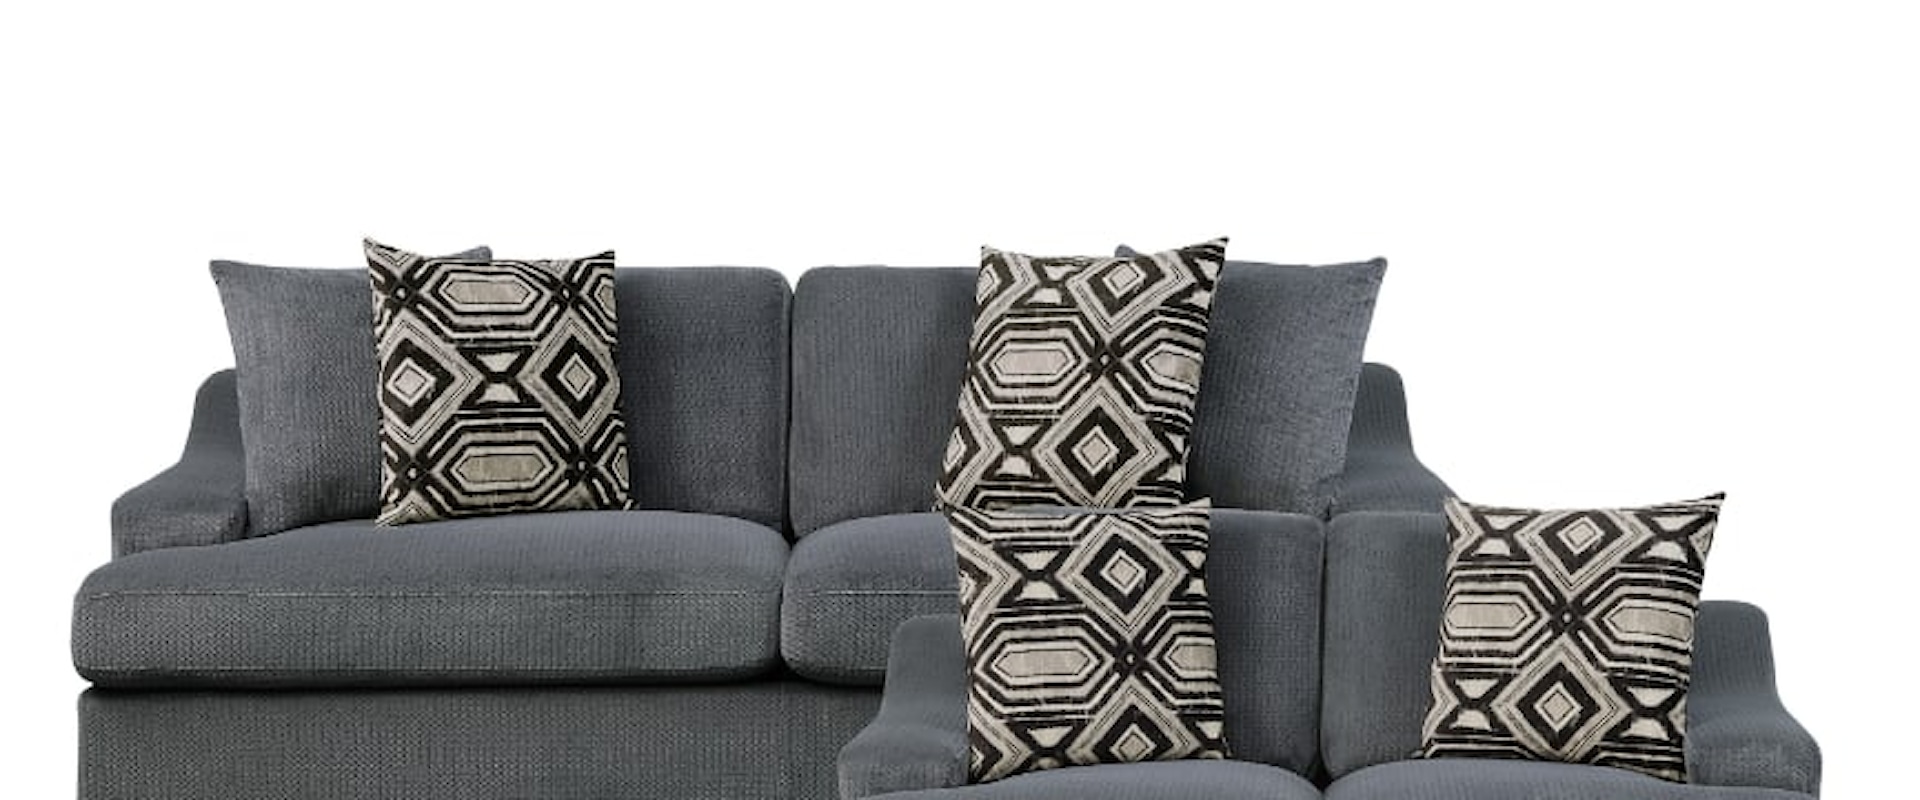 Contemporary 2-Piece Living Room Set with Throw Pillows